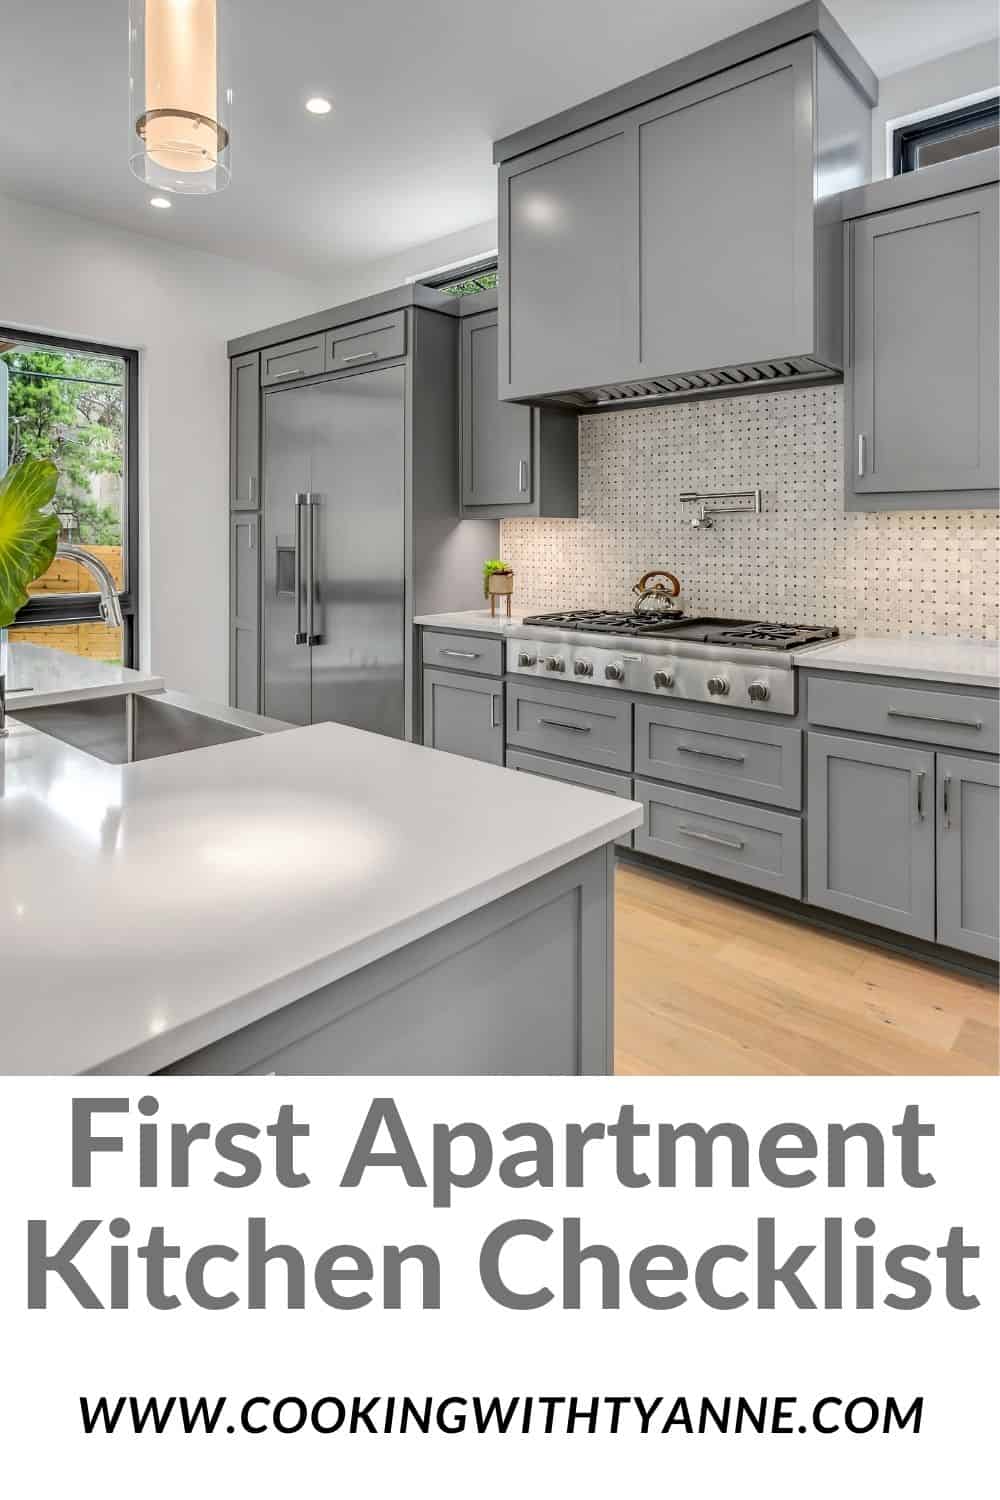 https://www.cookingwithtyanne.com/wp-content/uploads/2021/06/First-Apartment-Kitchen-Checklist.jpg